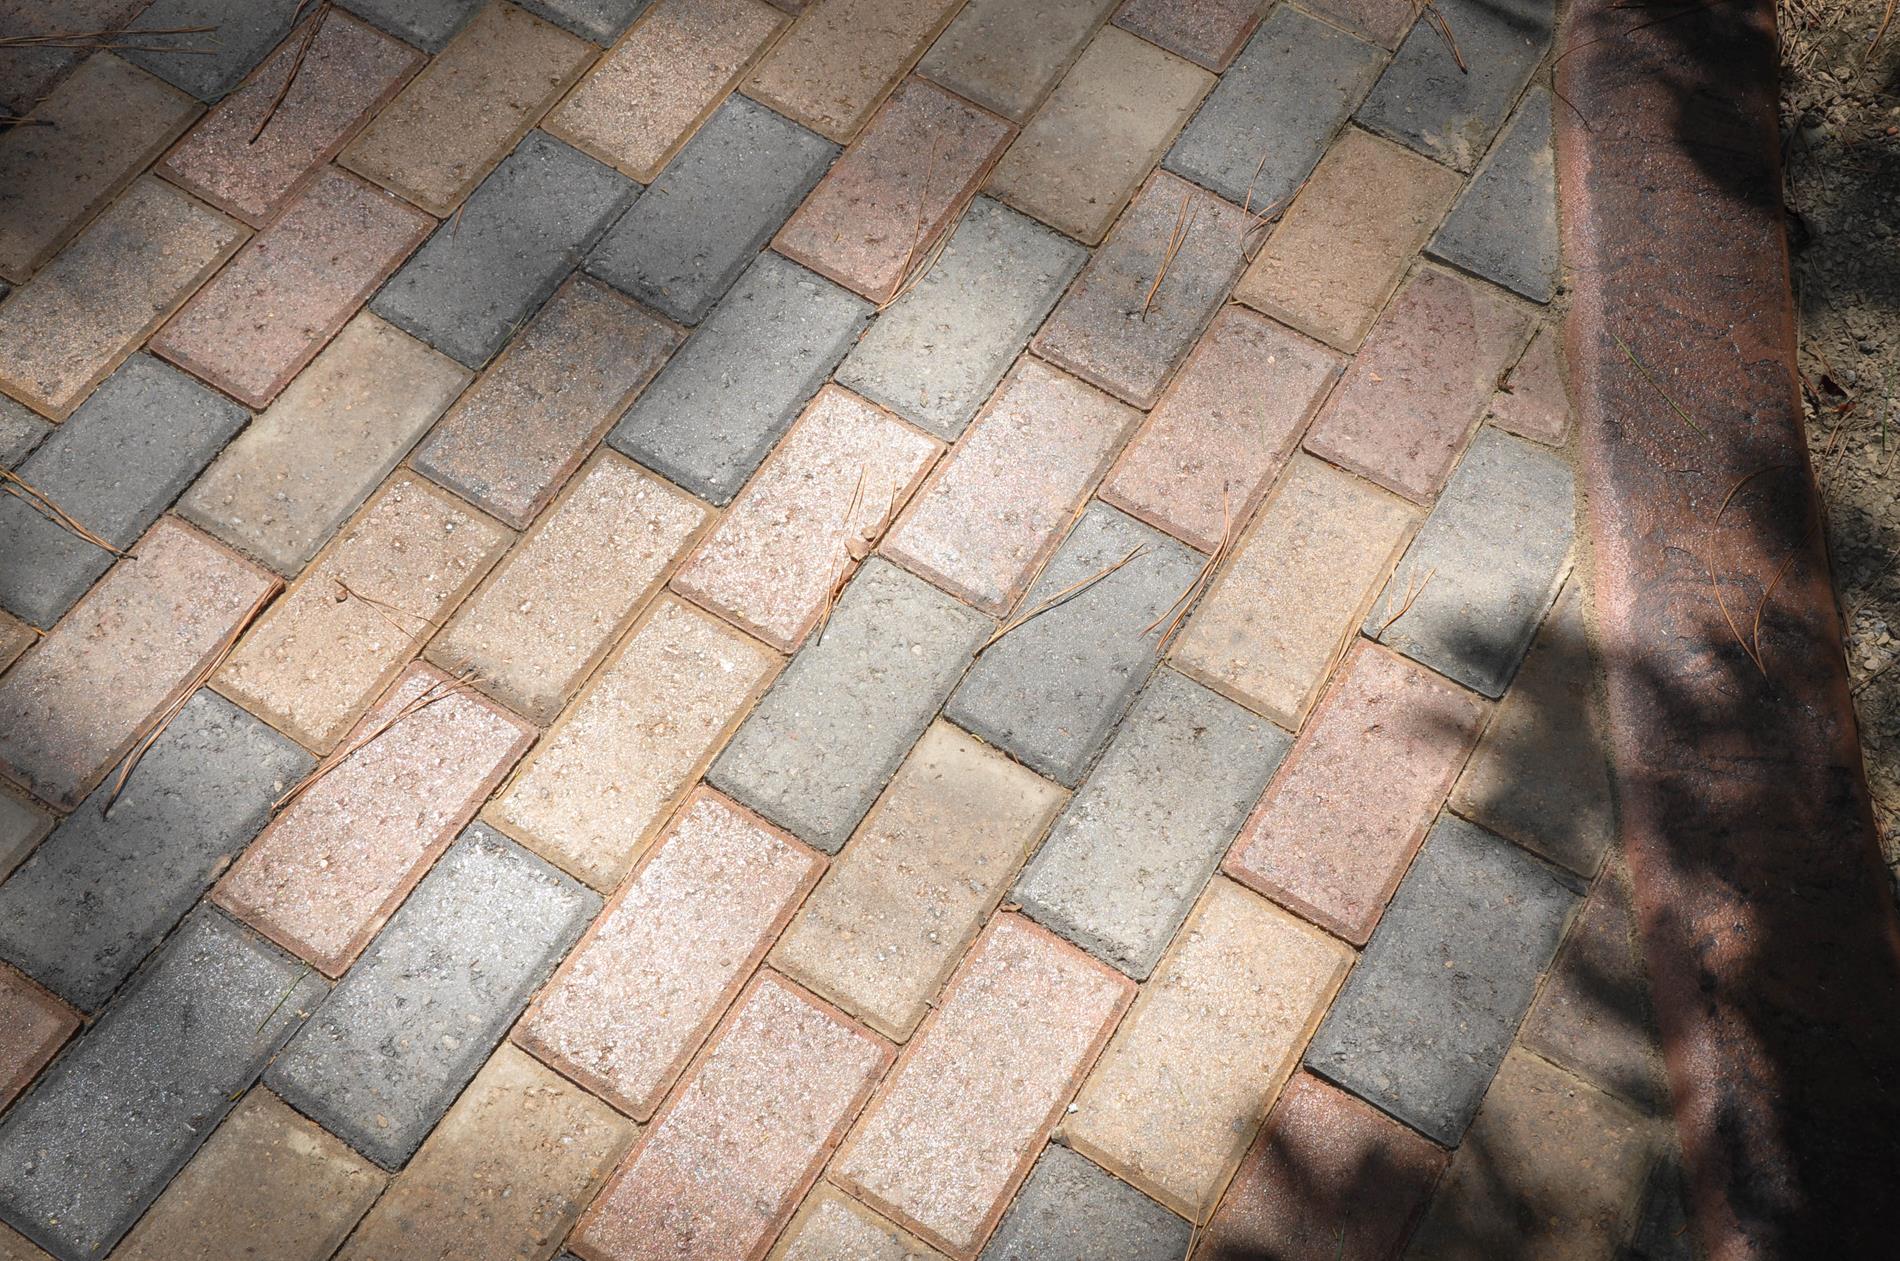 Close-up of brick pathway